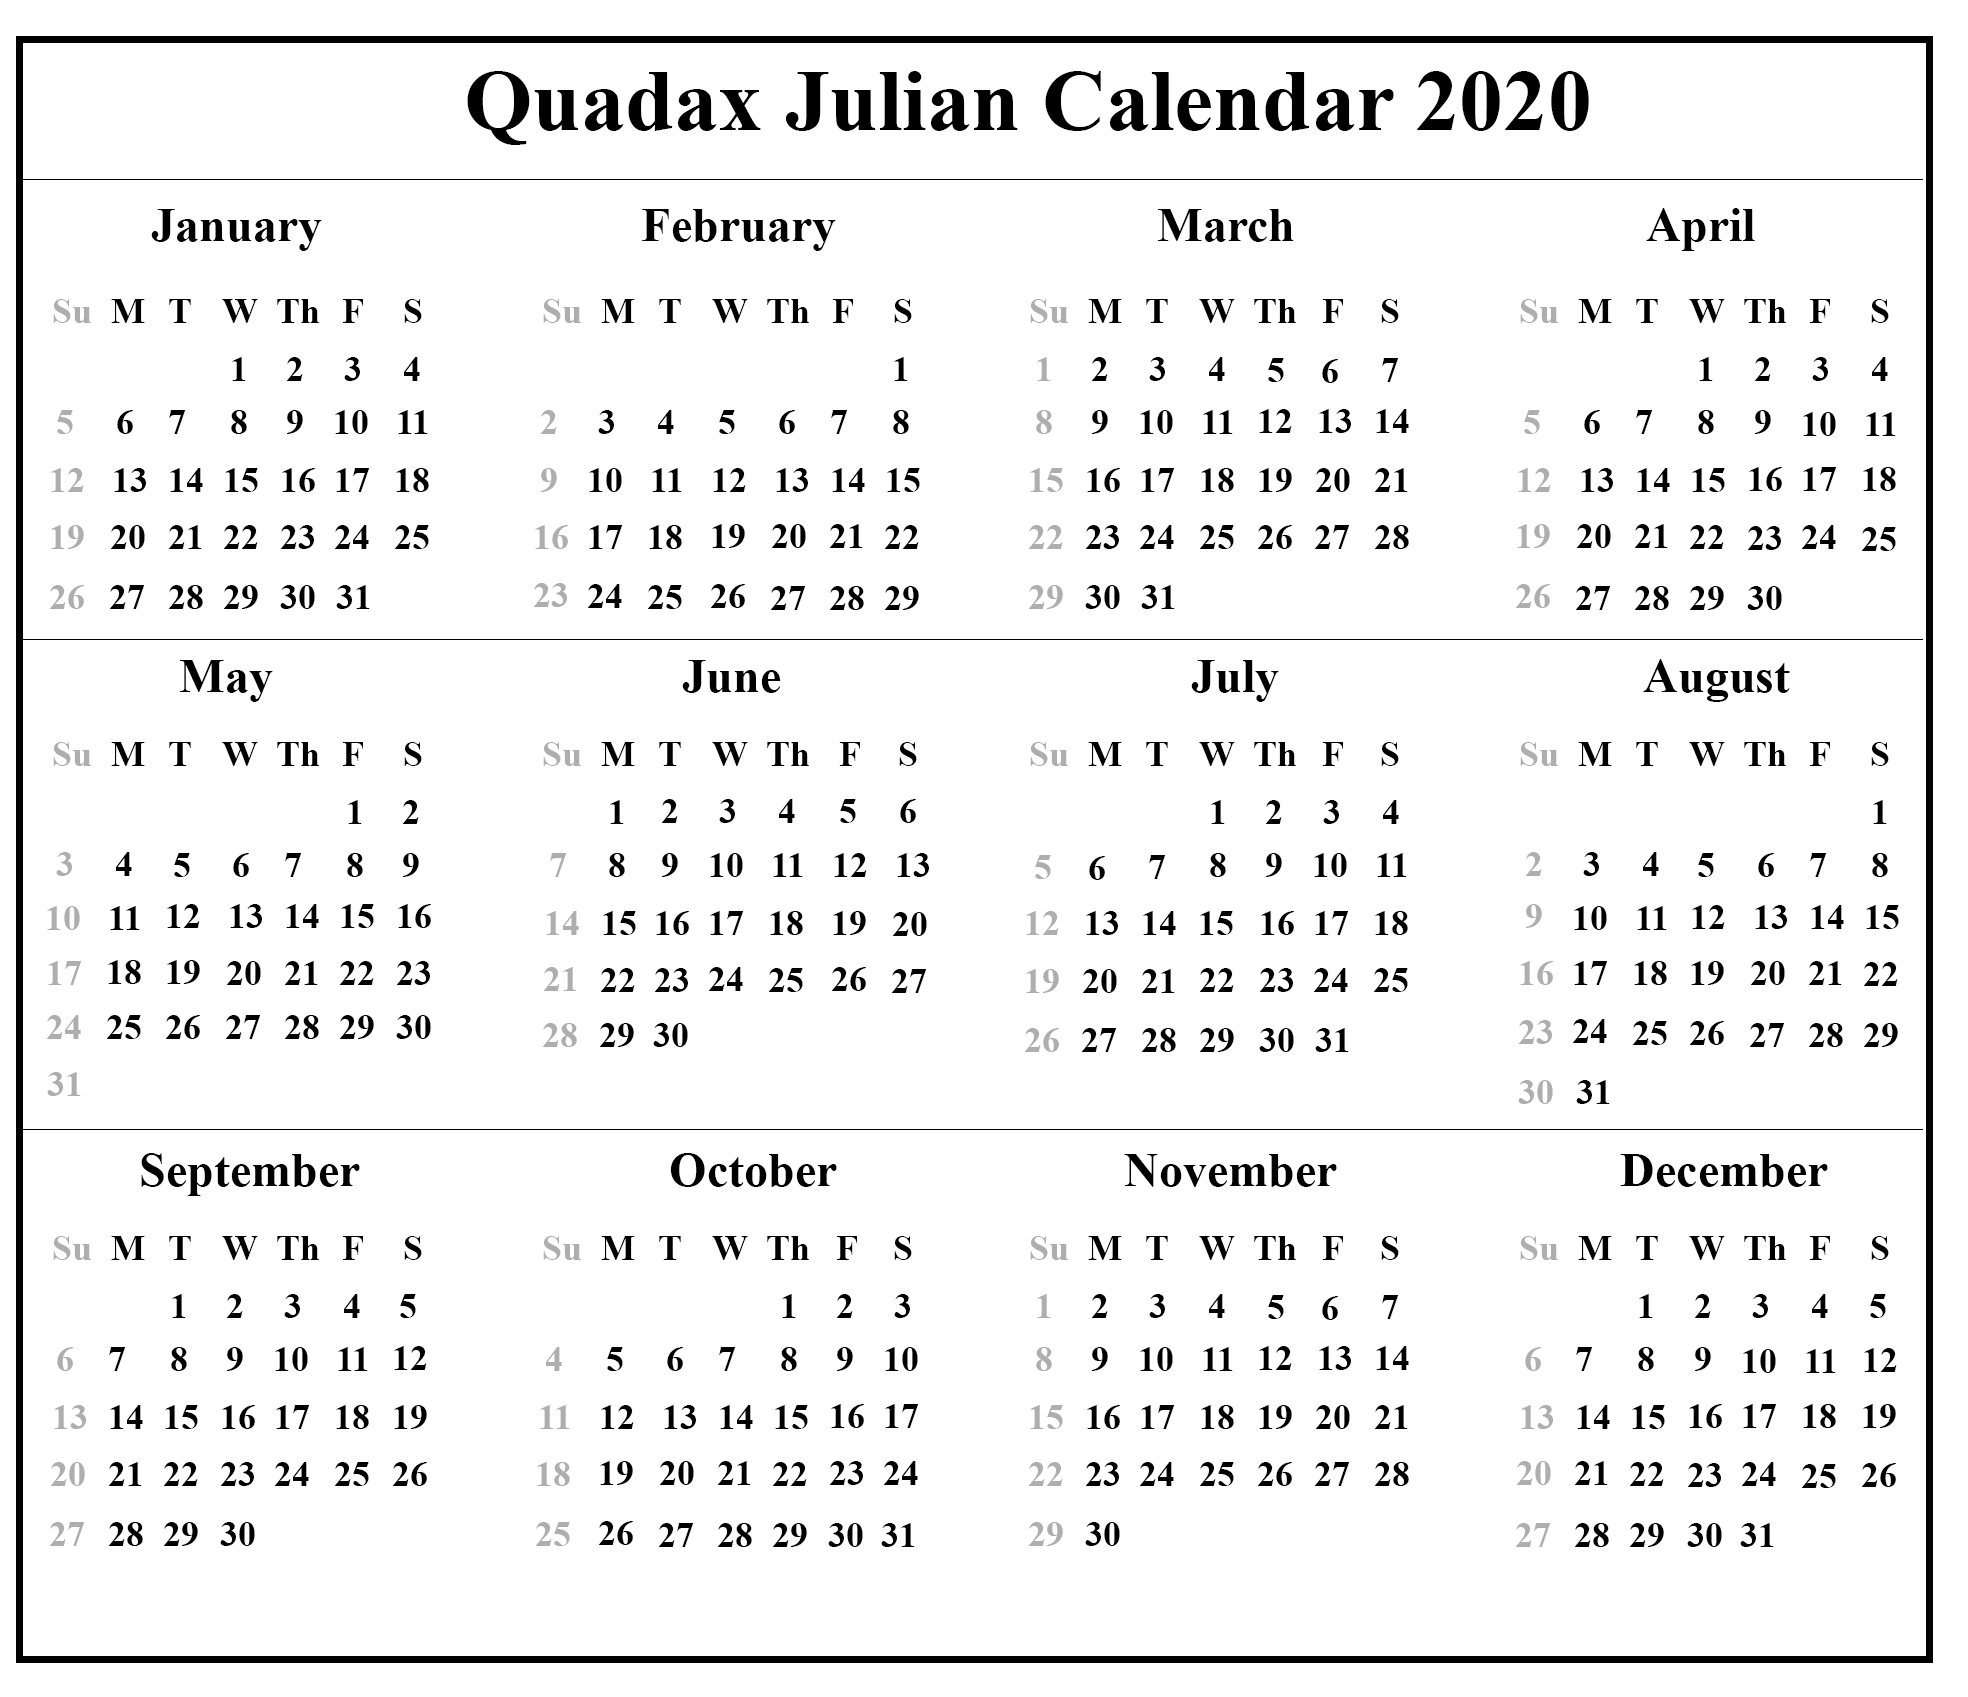 Calendario Juliano 2020 Quadax | Calendar For Planning Calendario Juliano 2021